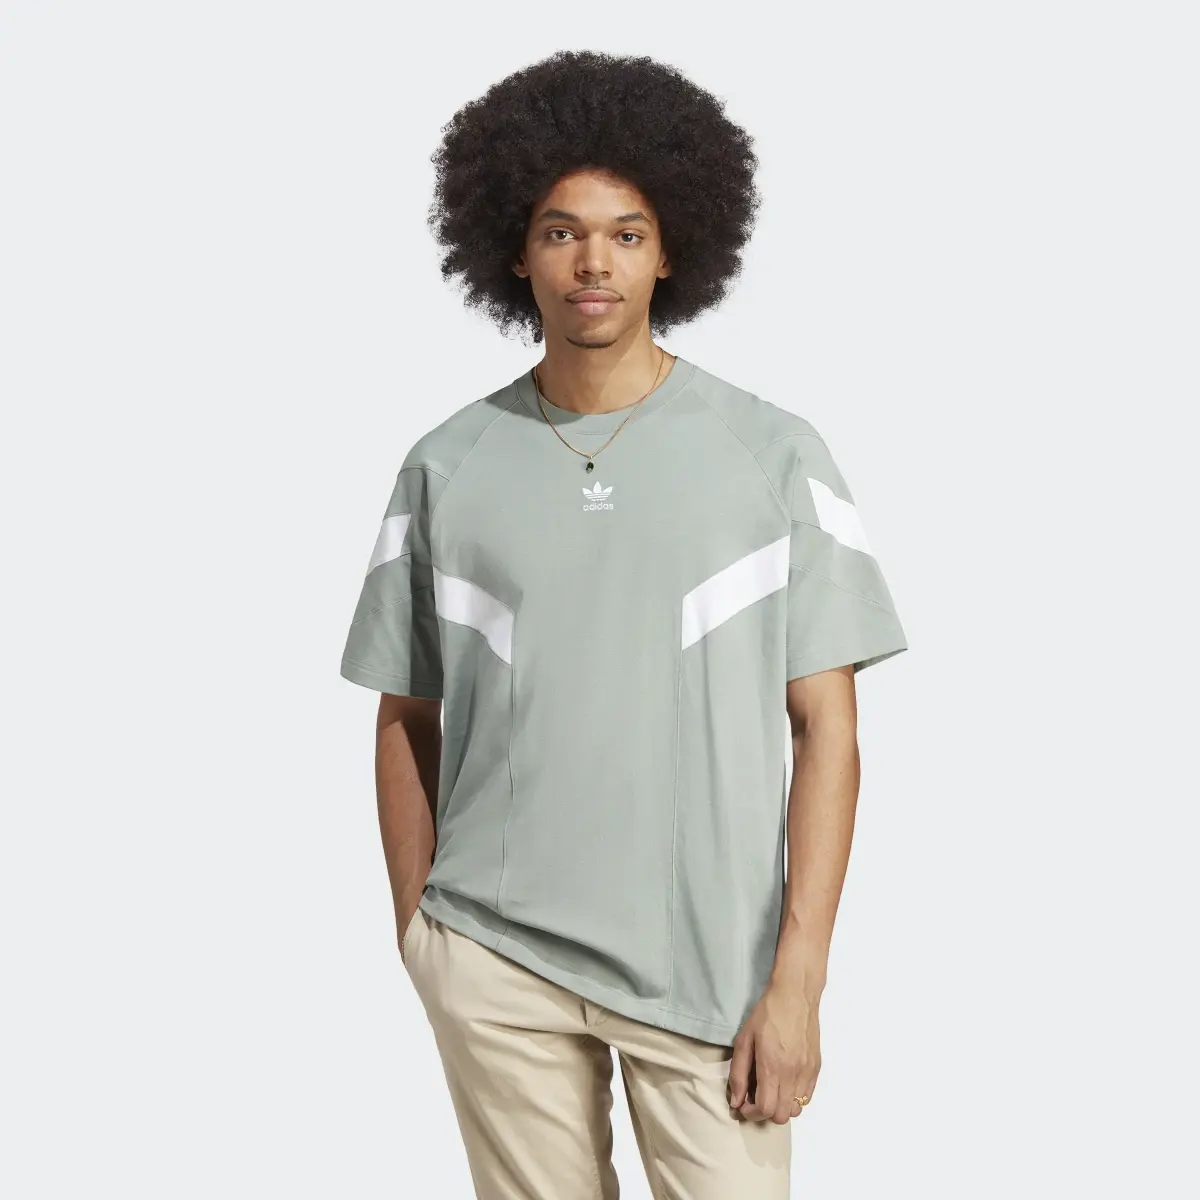 Adidas Rekive T-Shirt. 2